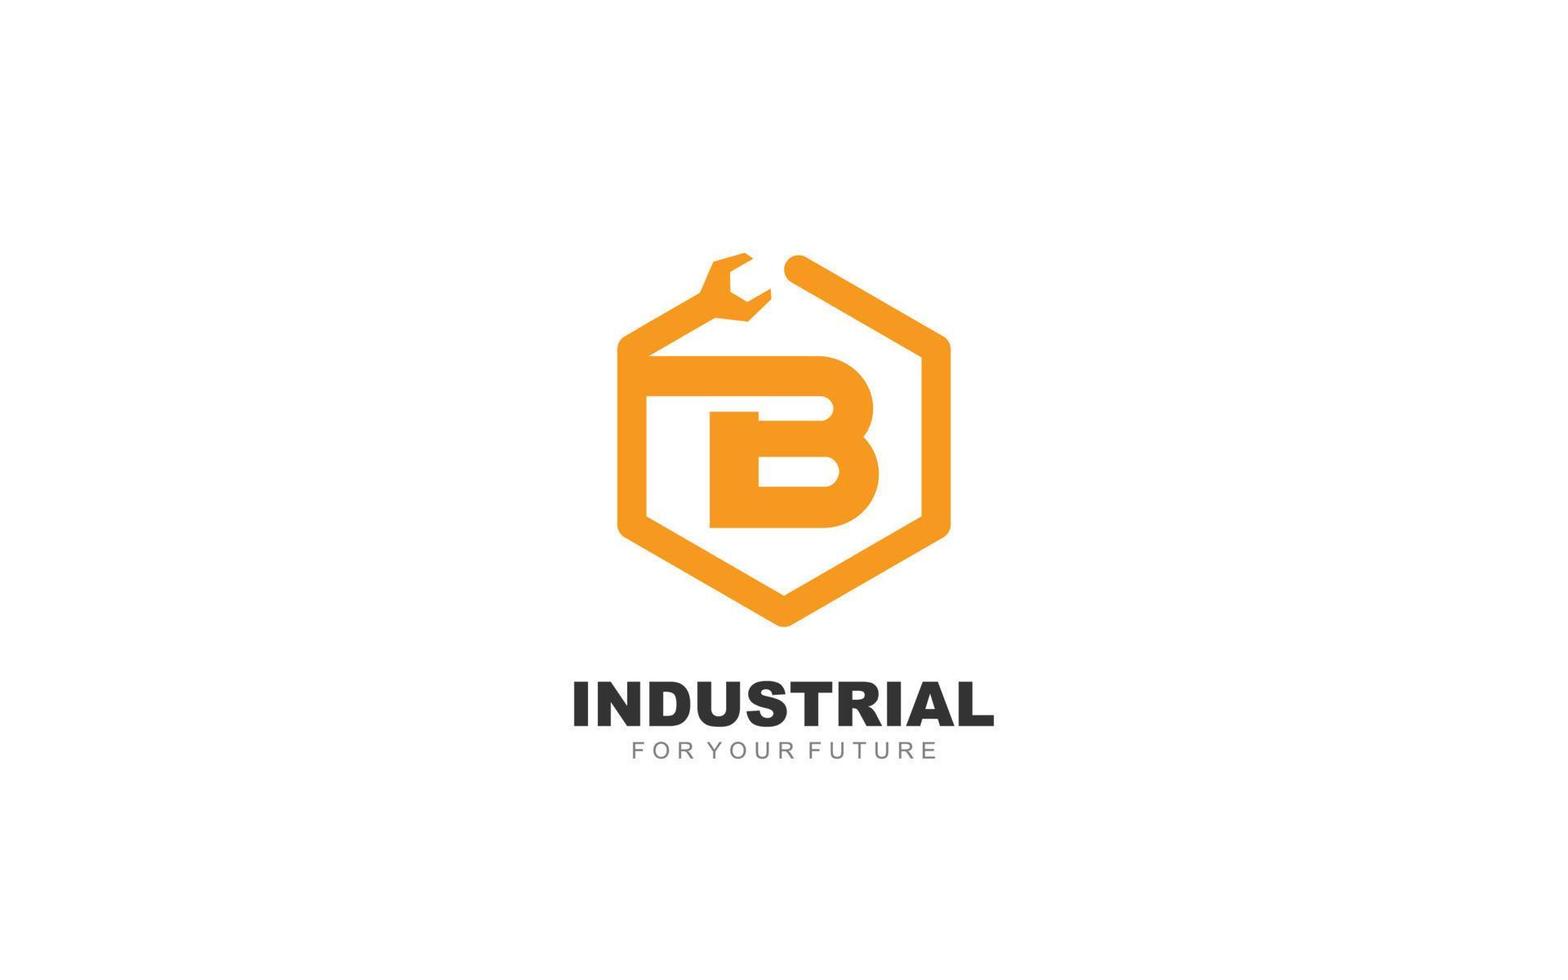 B logo plumbing for identity. letter template vector illustration for your brand.